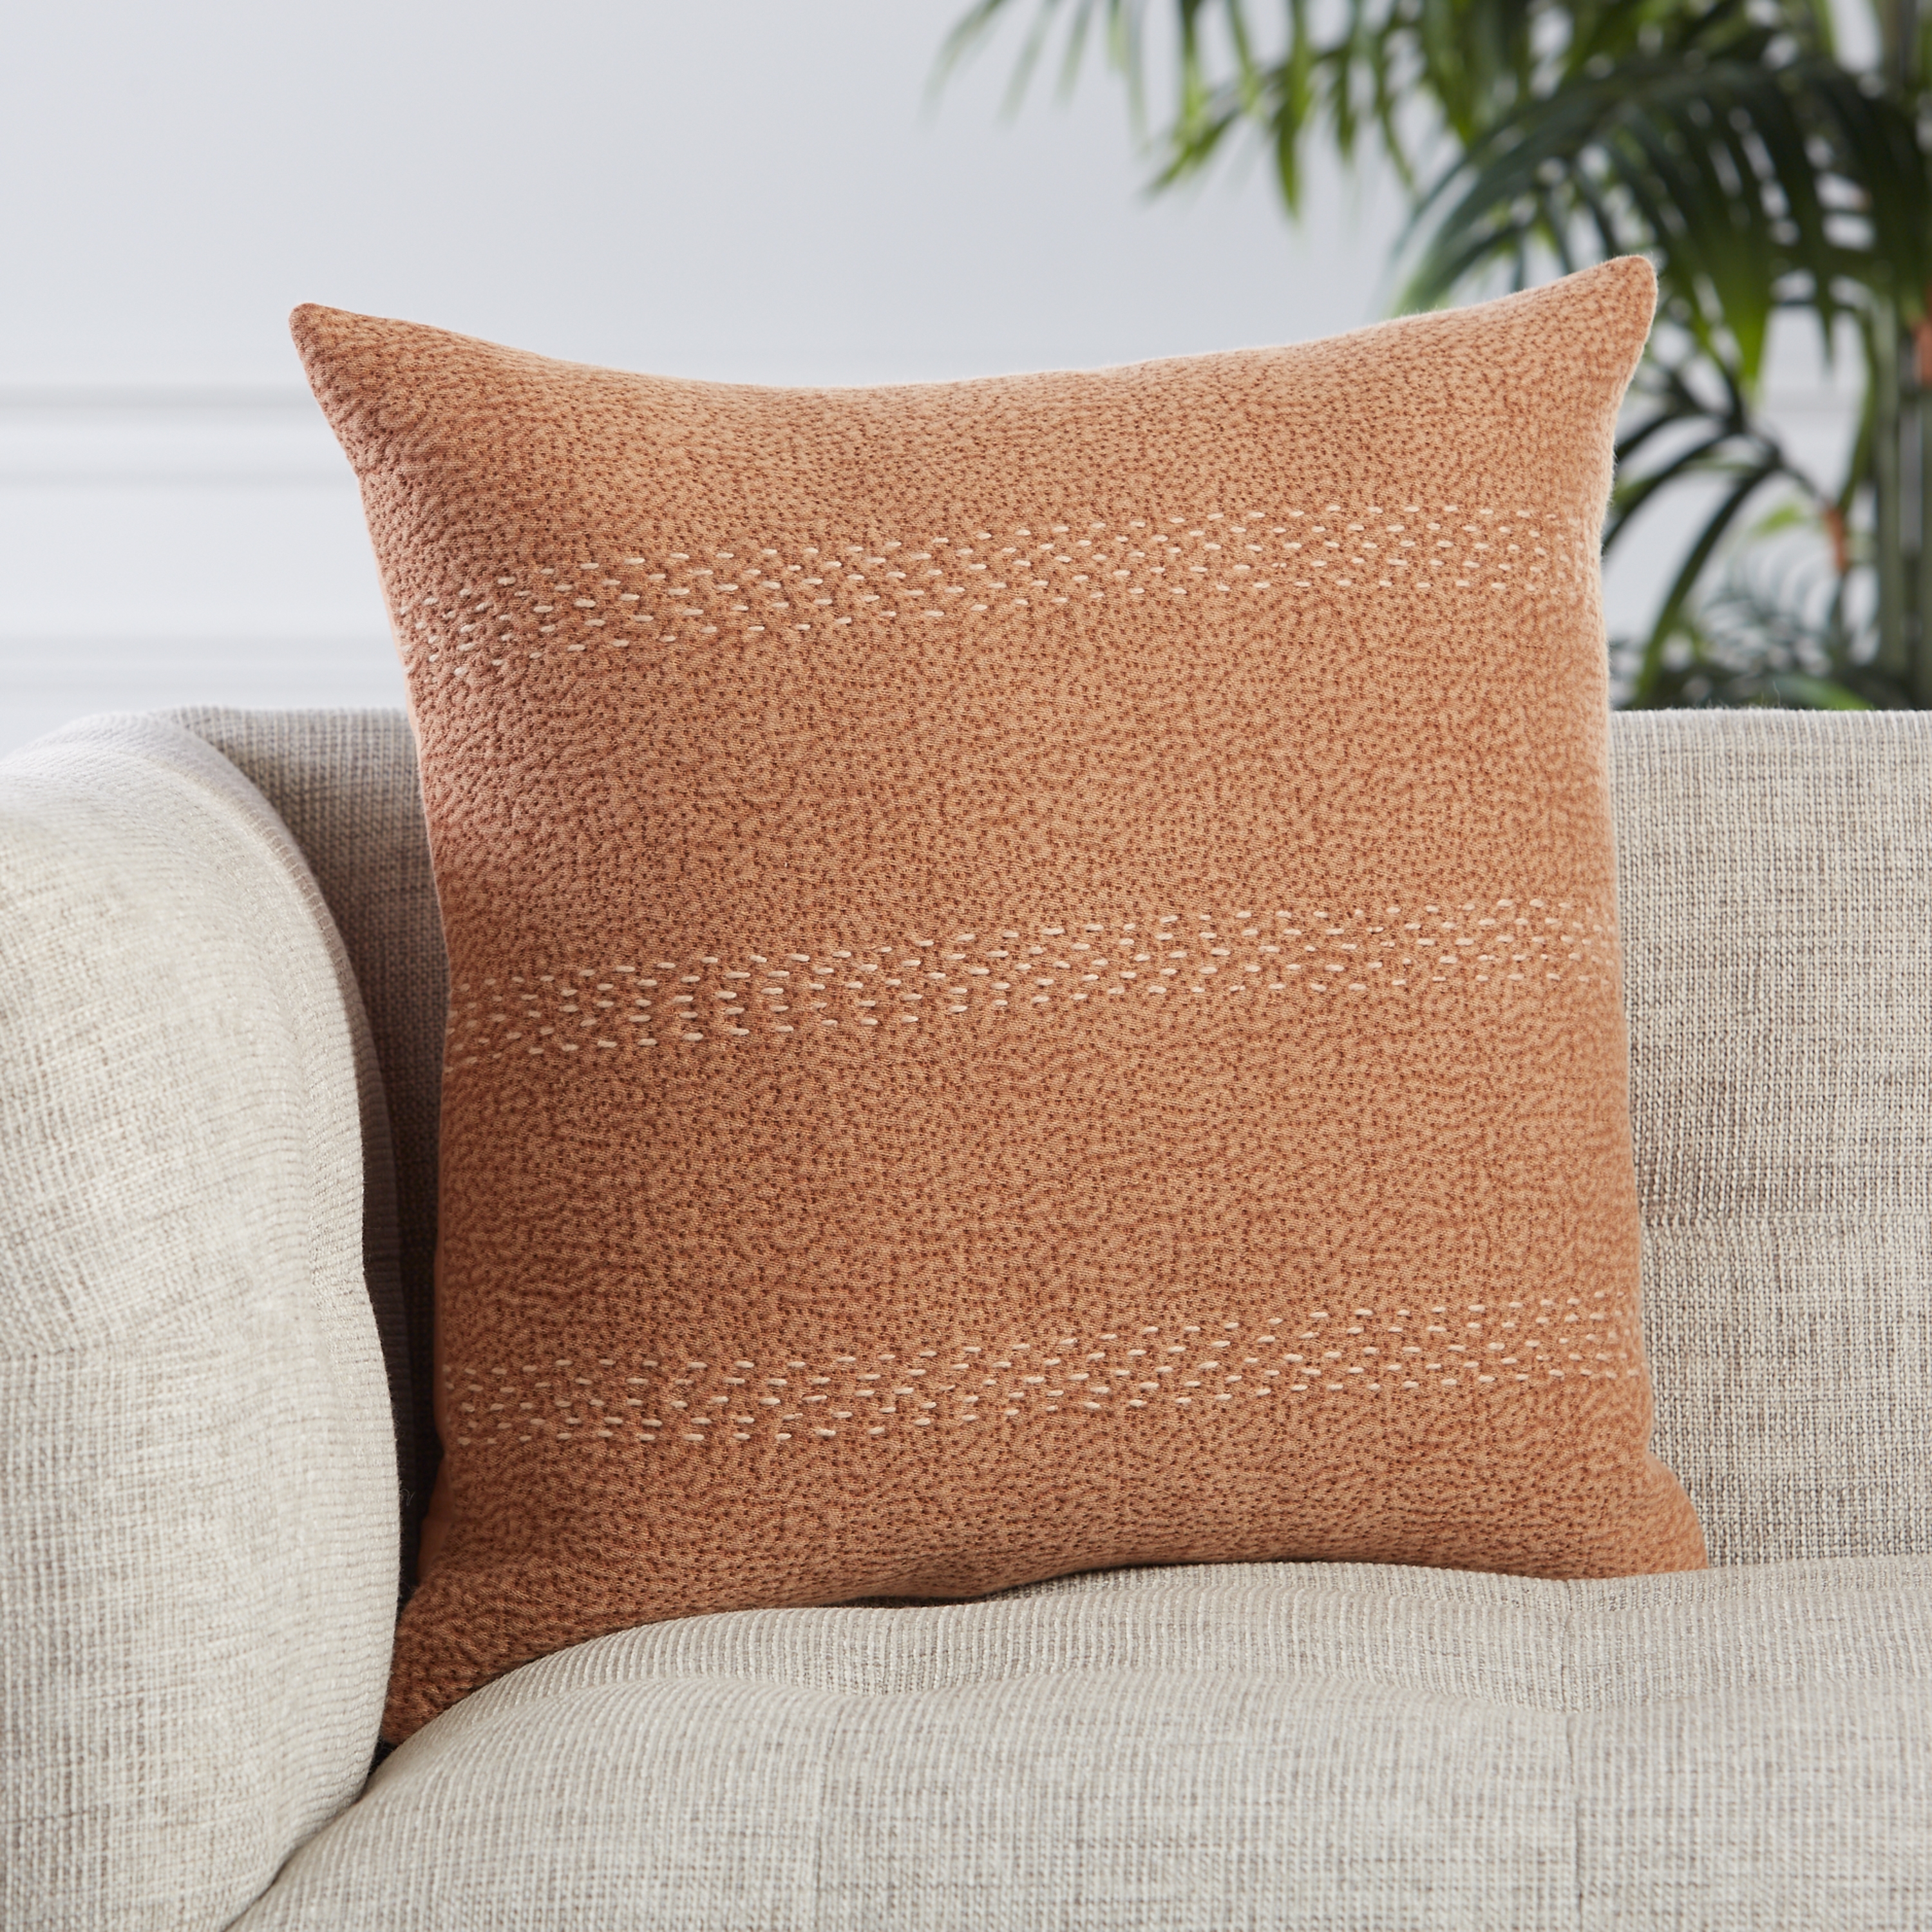 Trenton Pillow Cover, Terracotta, 20" x 20" Poly Insert - Image 3